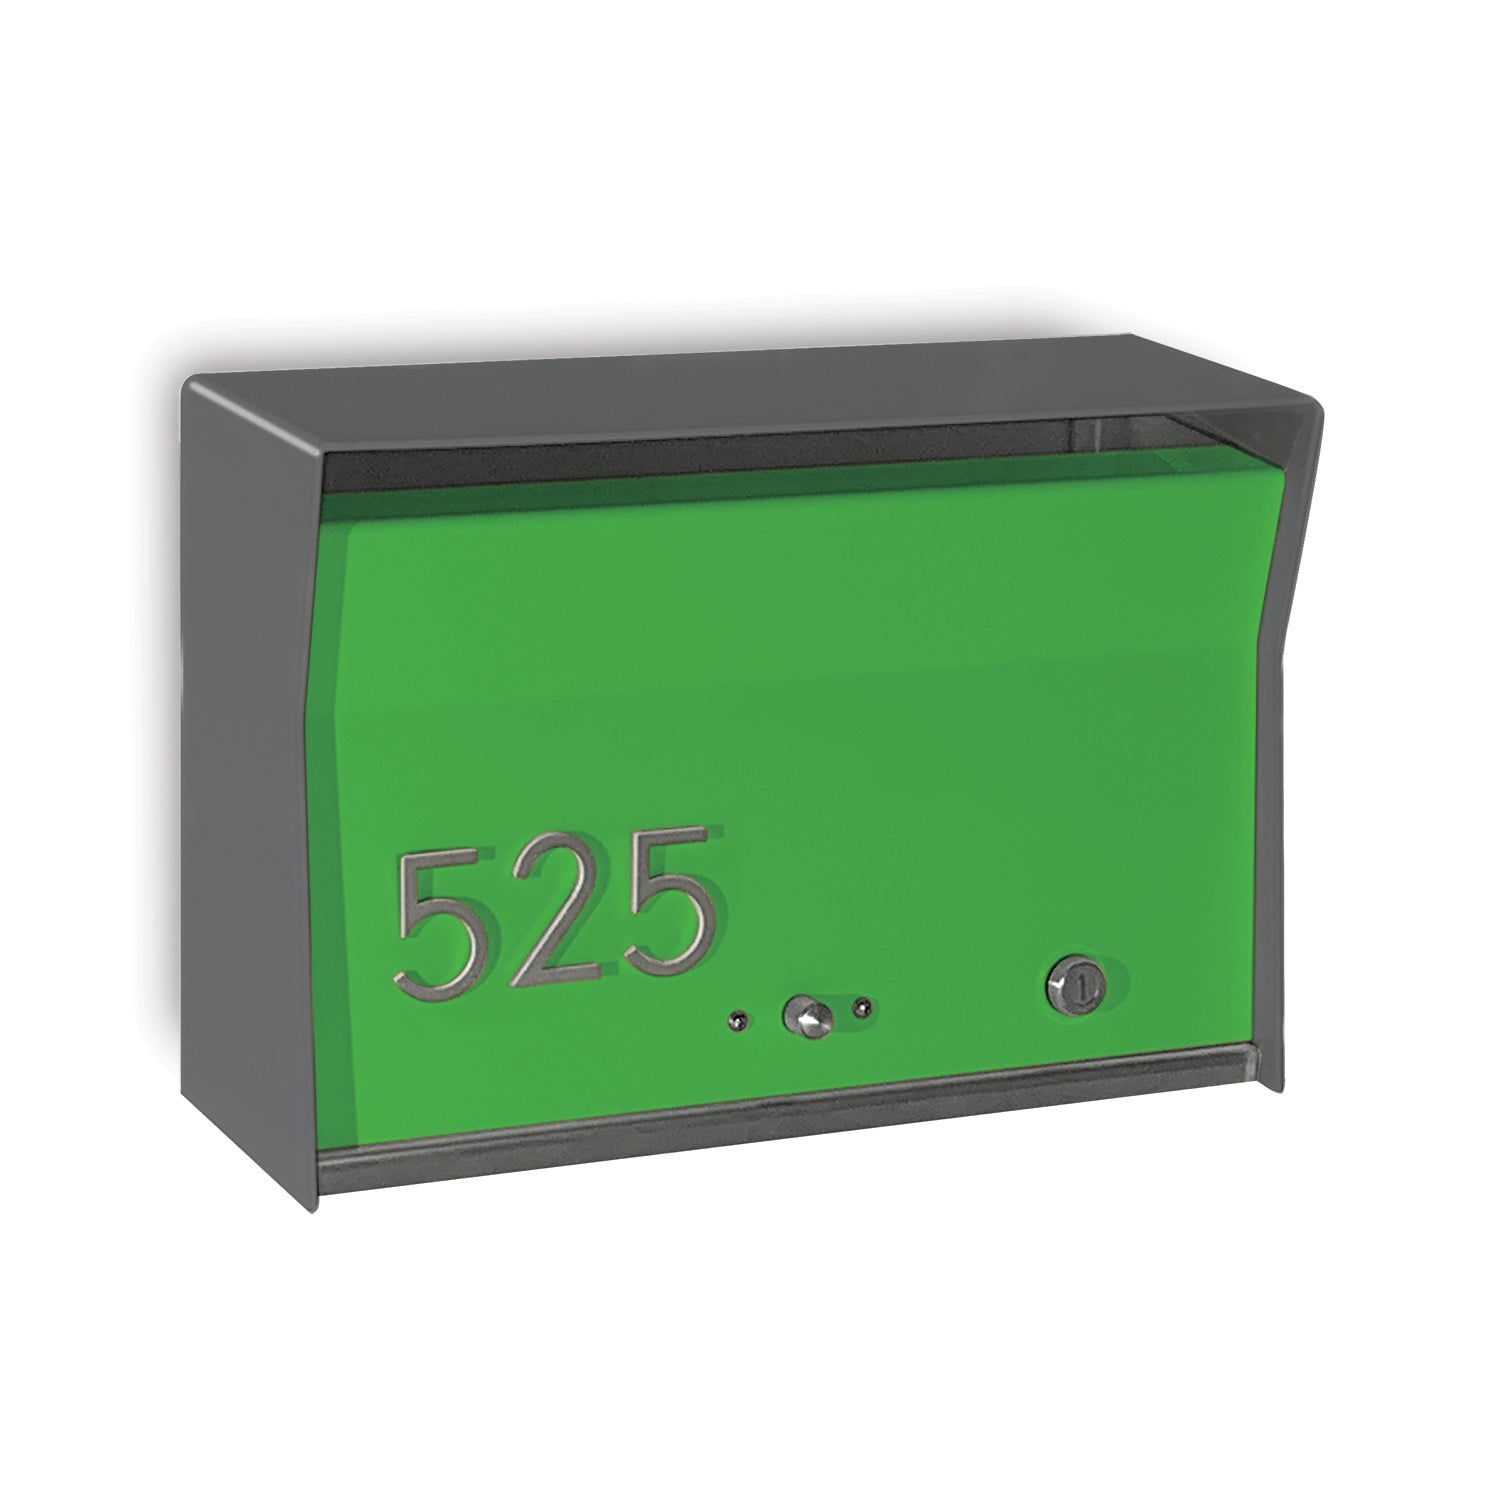 RetroBox Locking Wall Mount Mailbox in designer grey and lime green